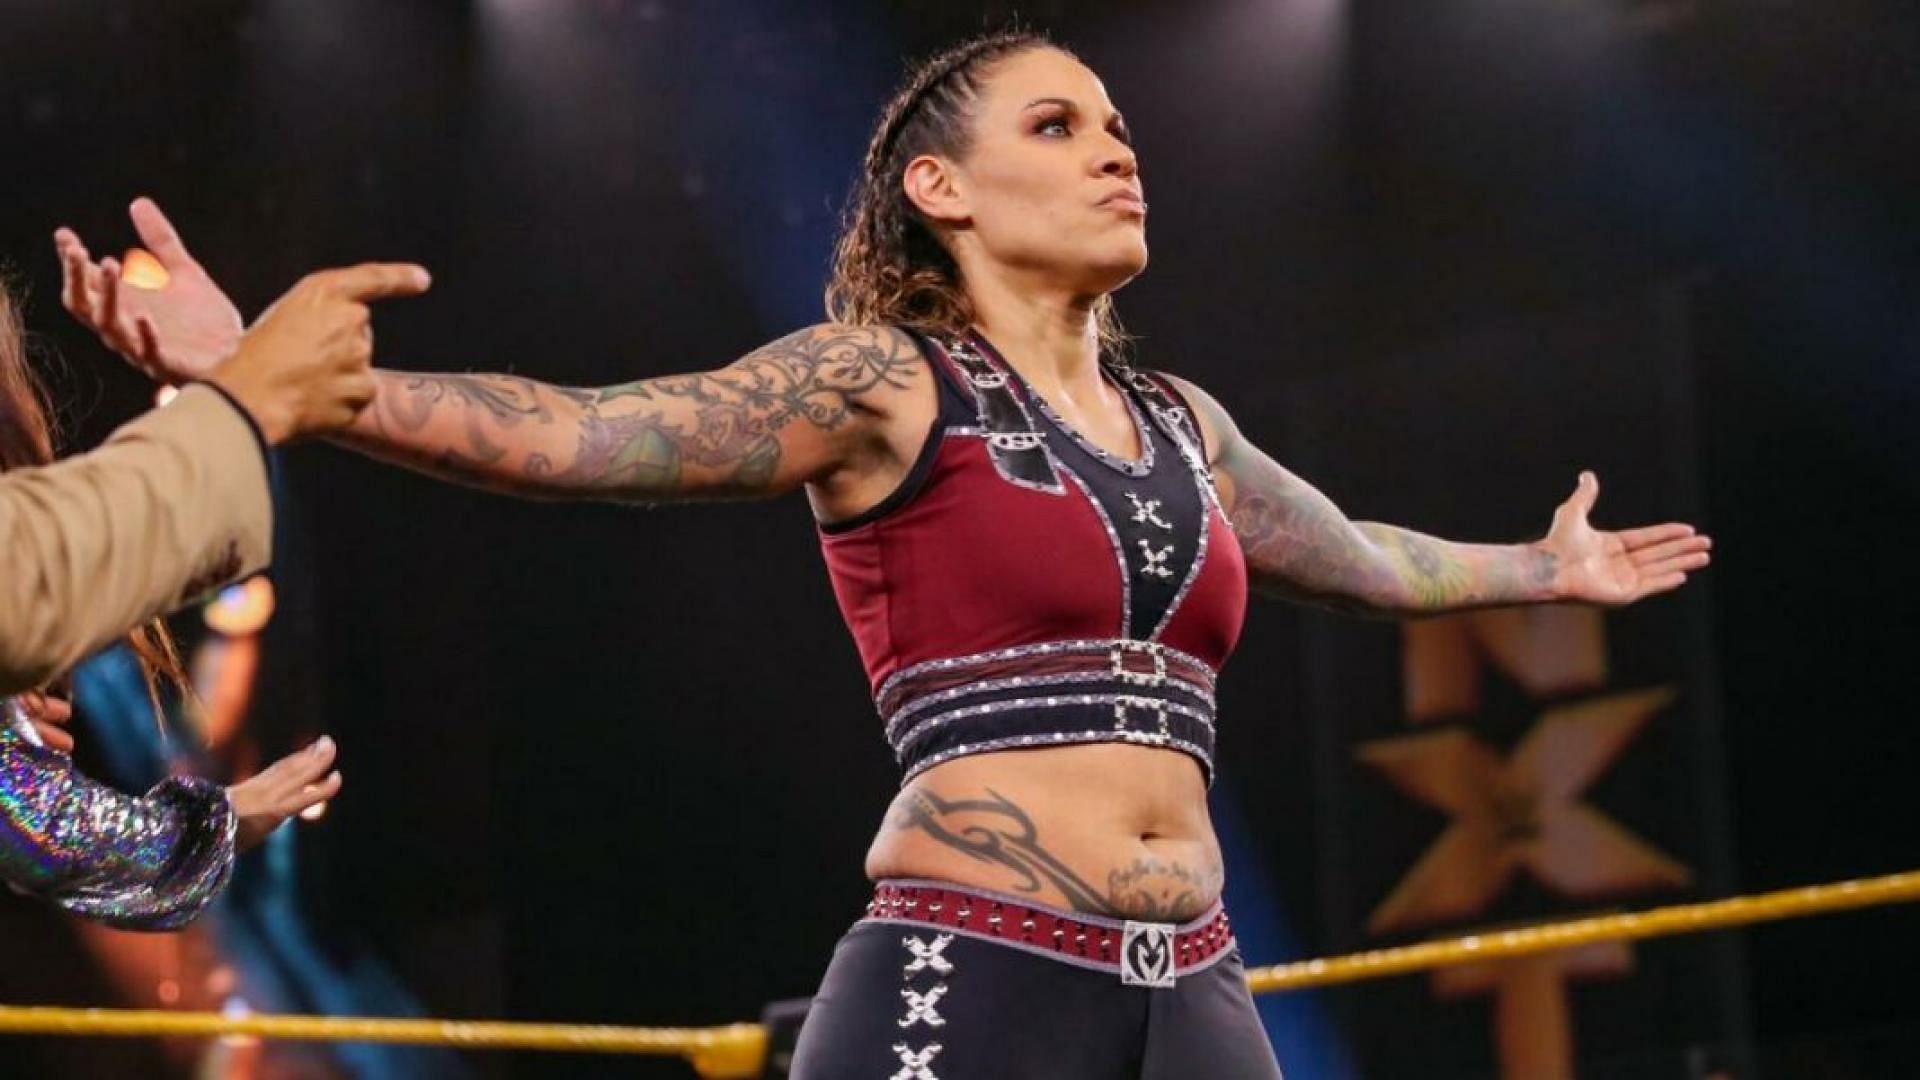 Could Mercedes Martinez return to WWE?